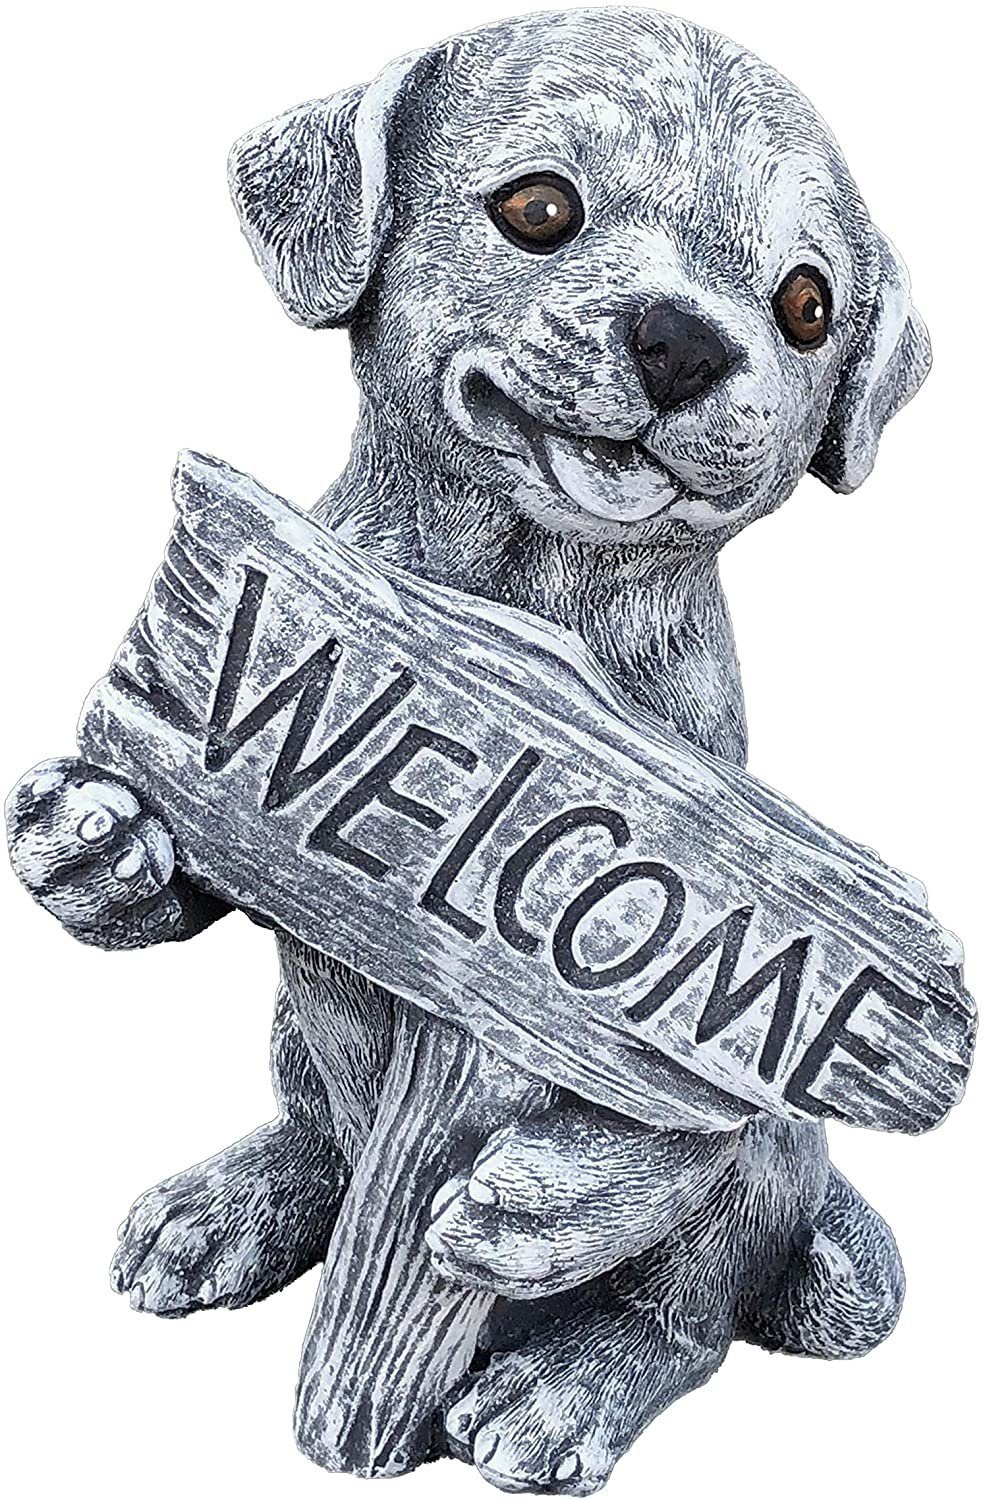 Stone and Style Gartenfigur Steinfigur Hund Welcome